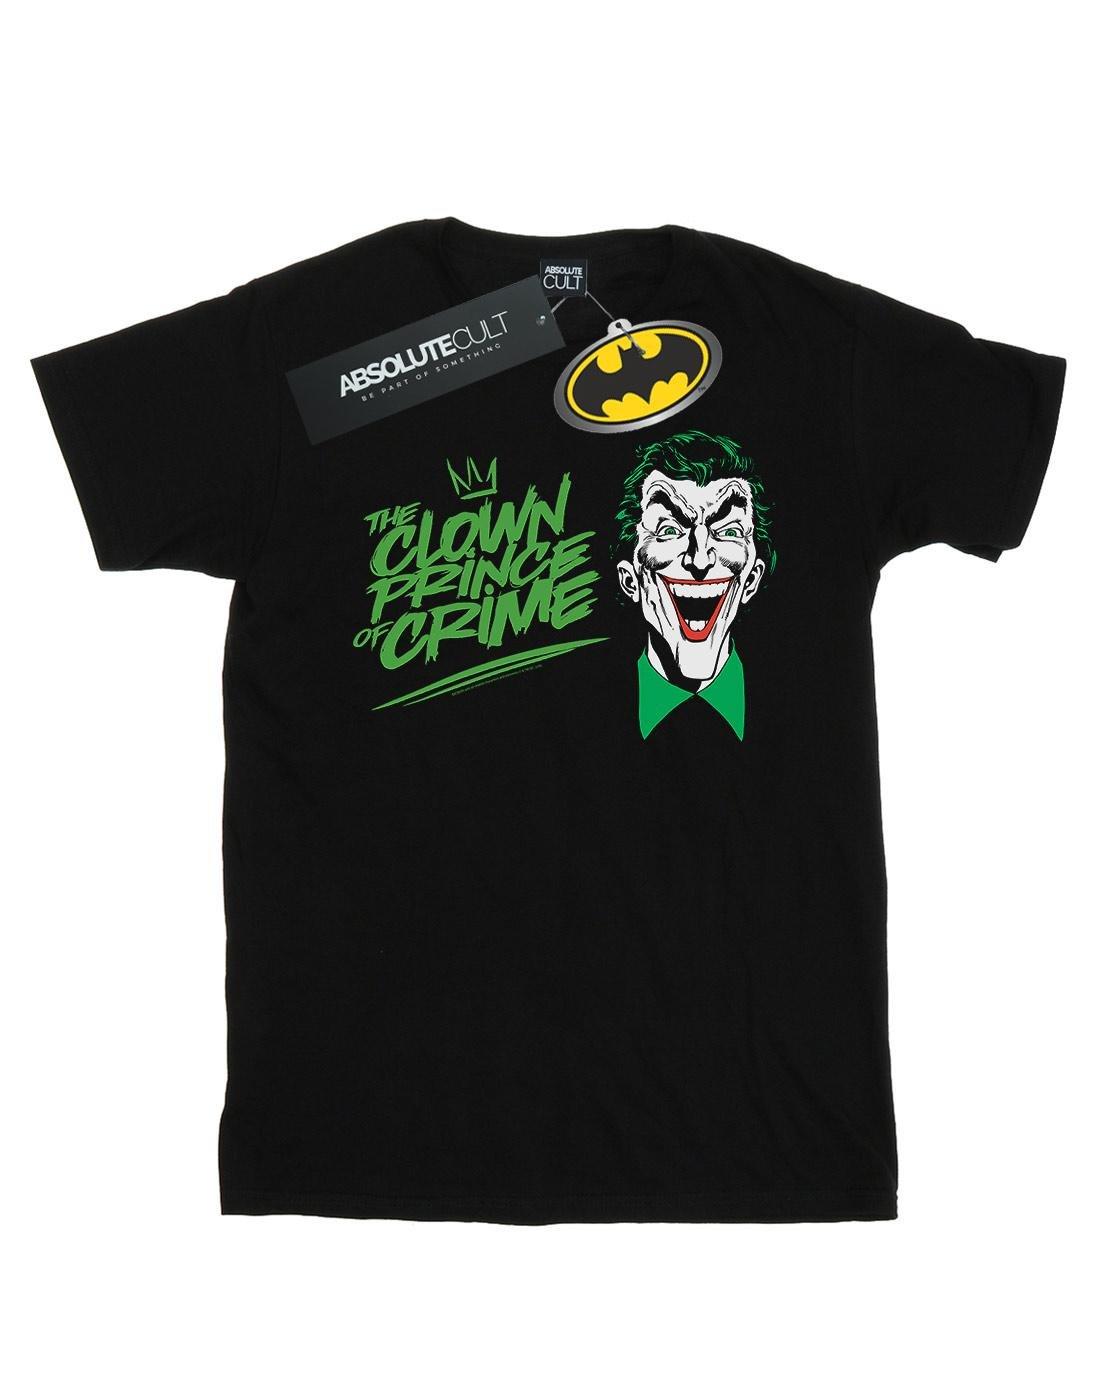 DC COMICS  Tshirt BATMAN JOKER THE CLOWN PRINCE OF CRIME 